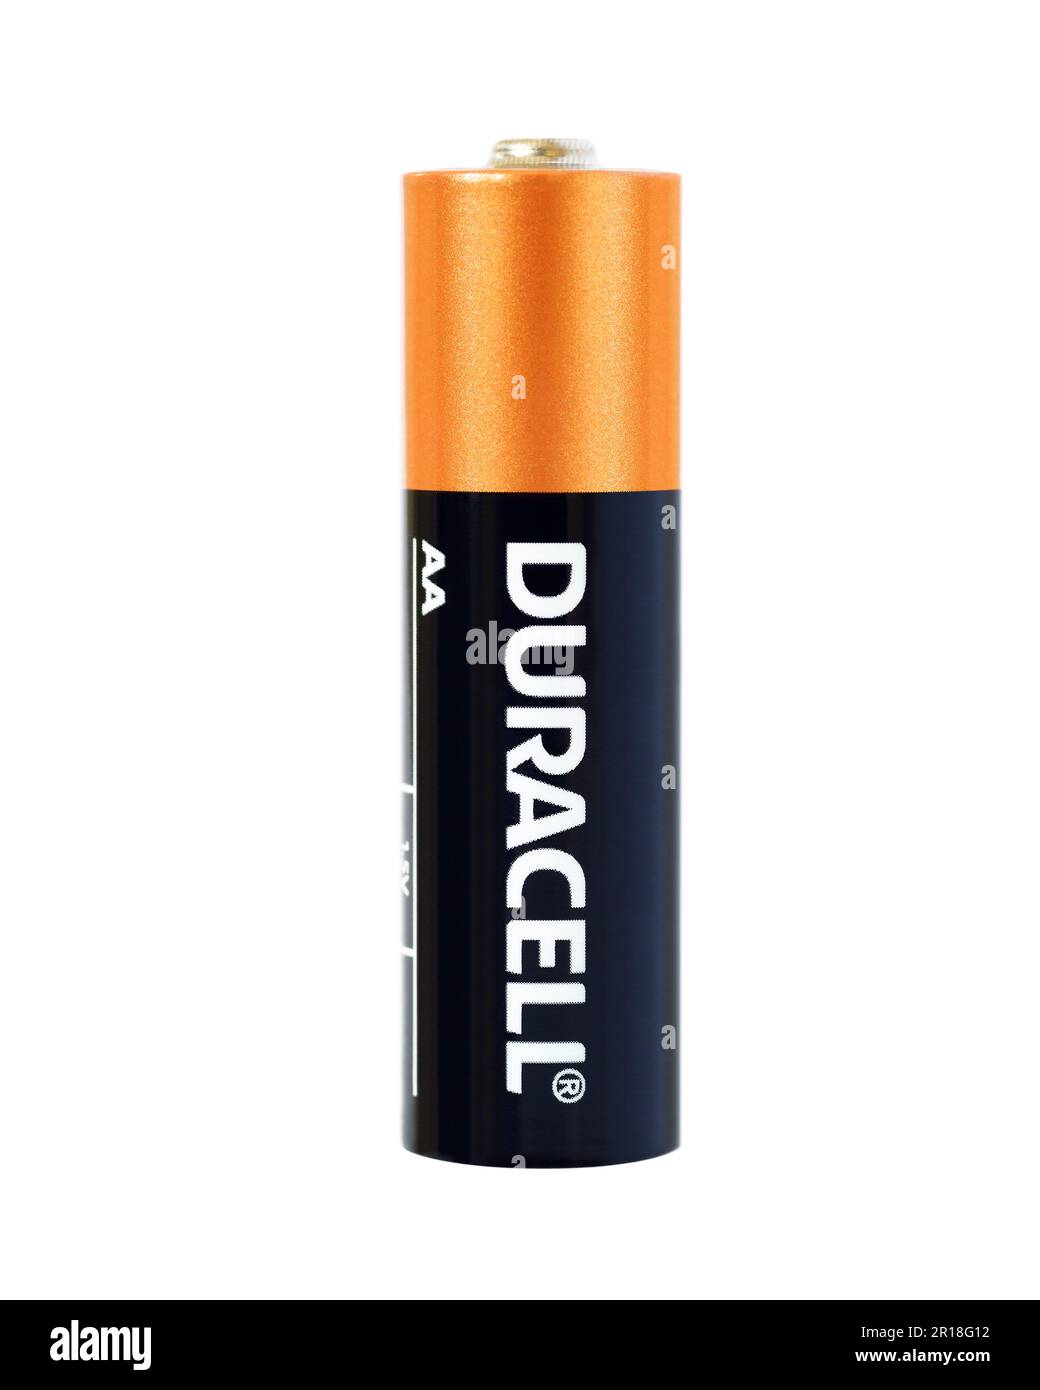 Batteria Duracell Foto Stock